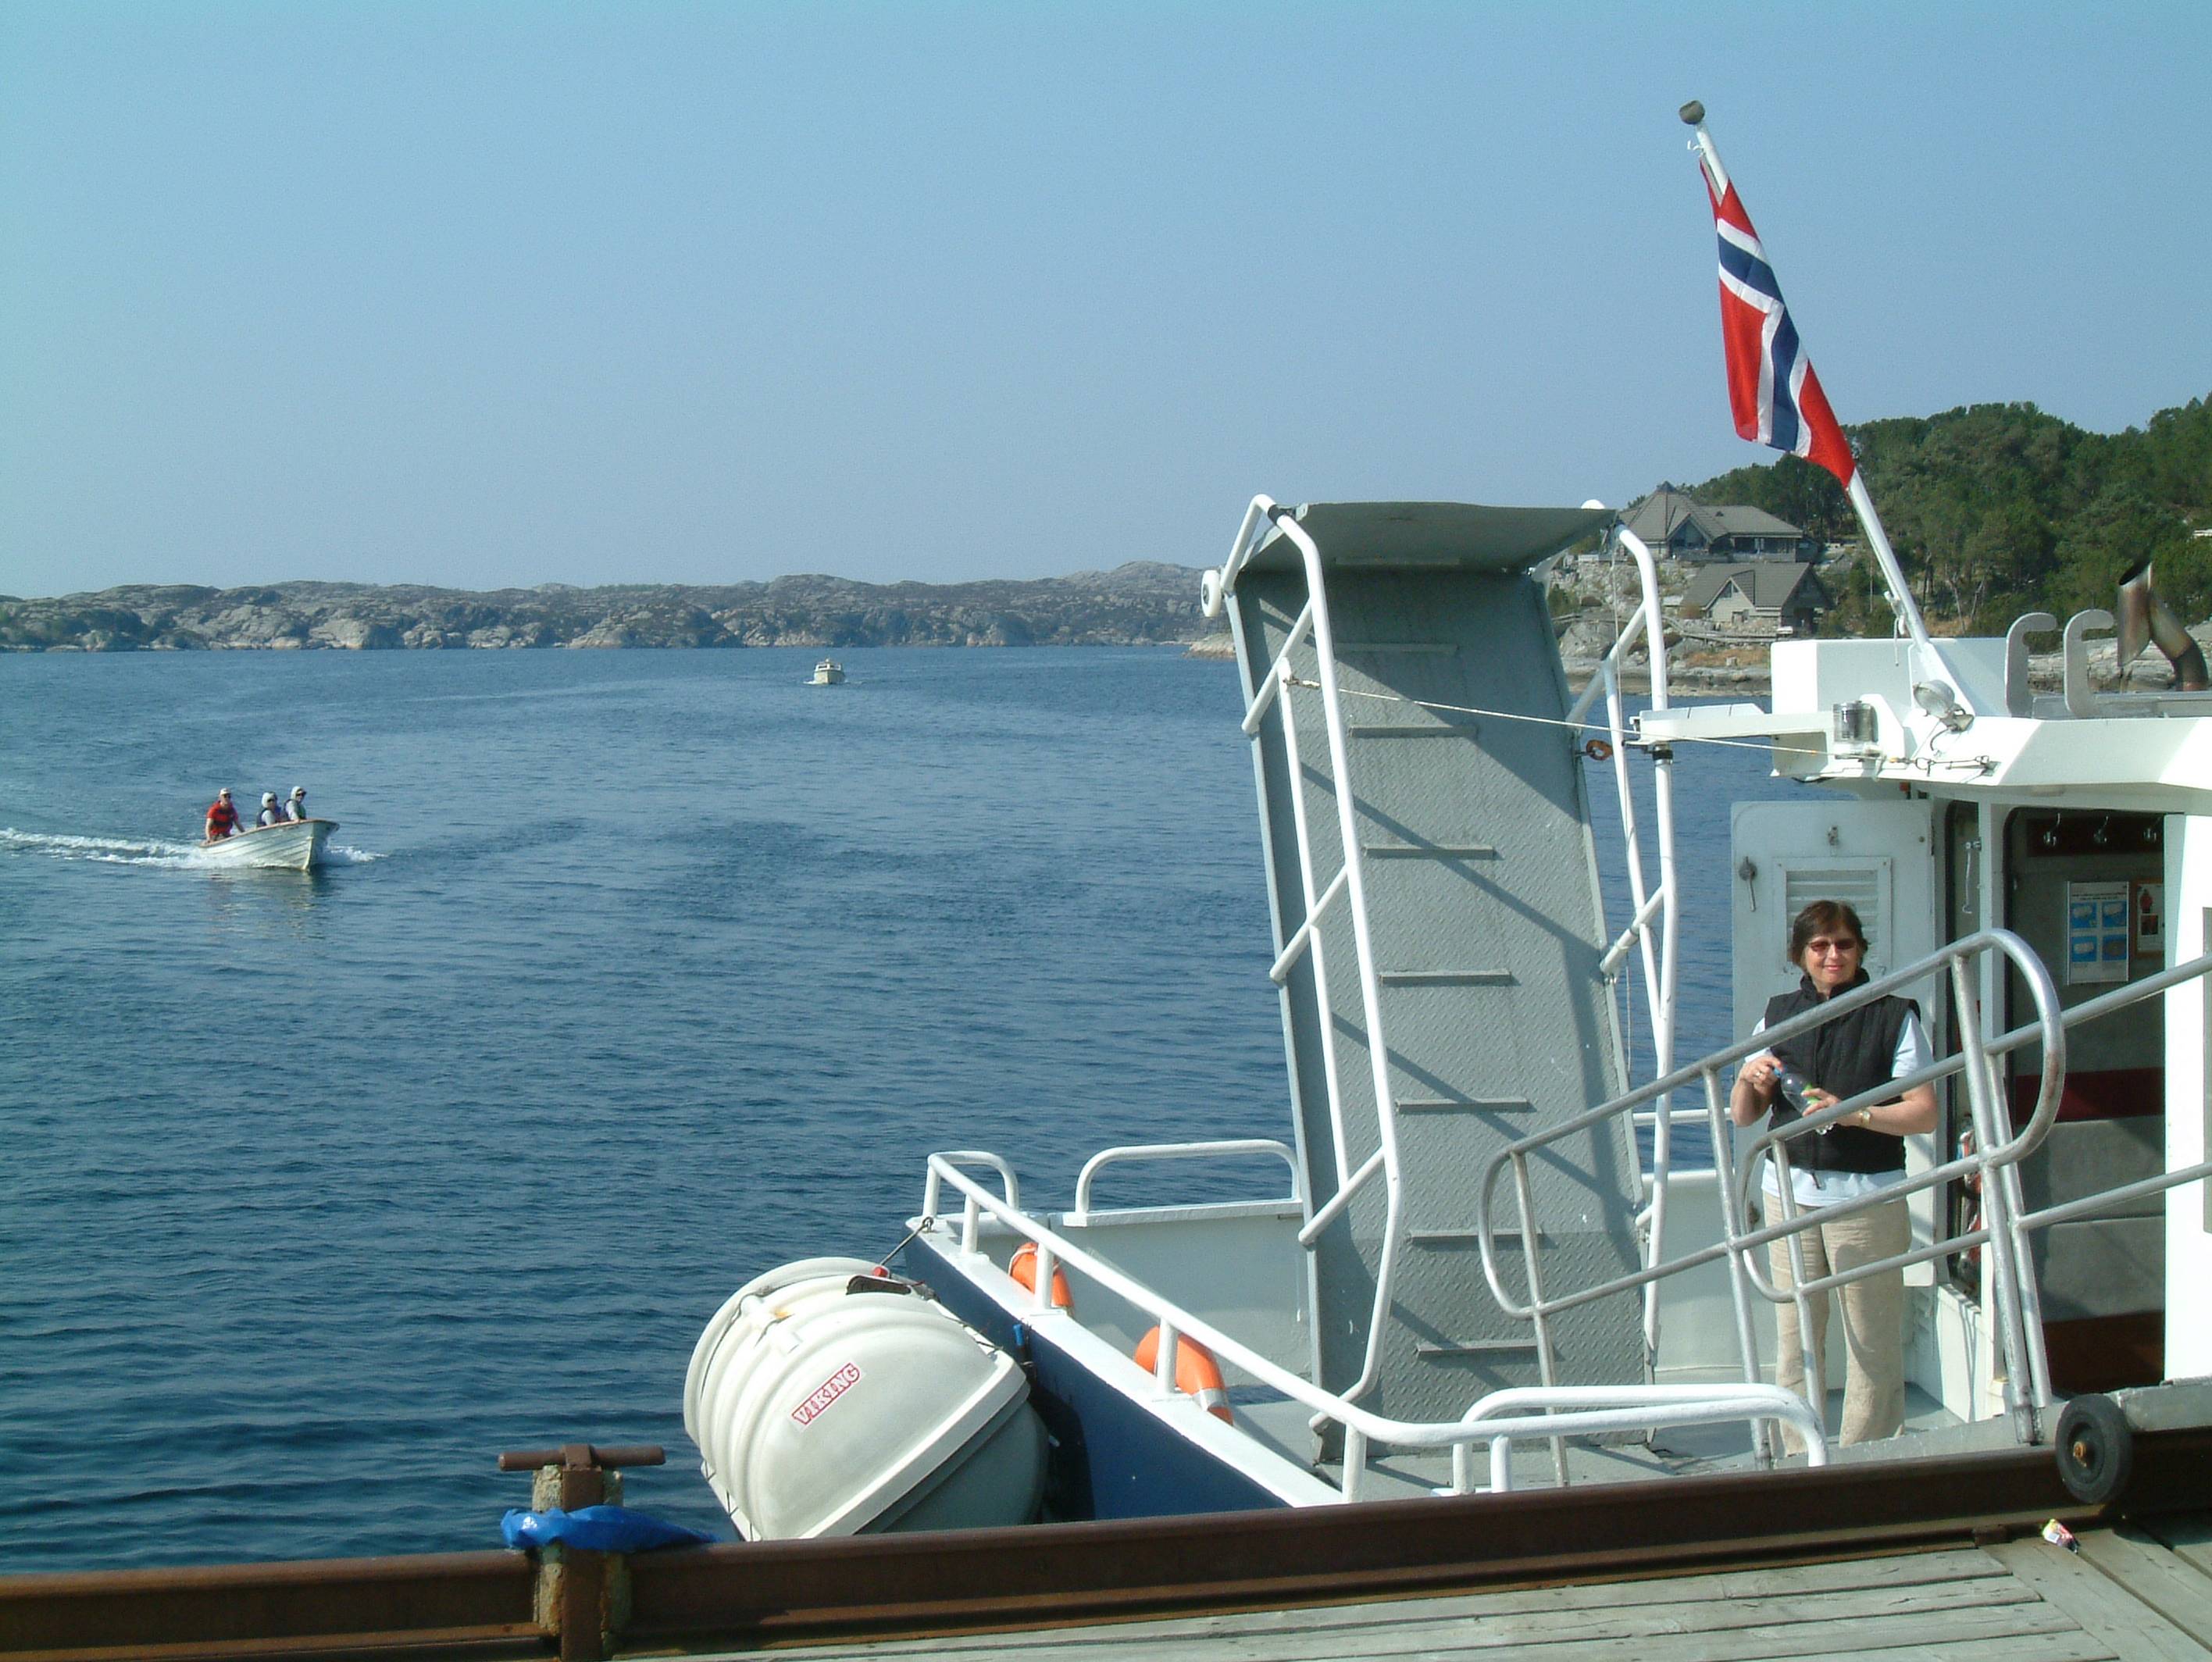 TorneRose-Eivindvik on the SeaWay at Mjmna